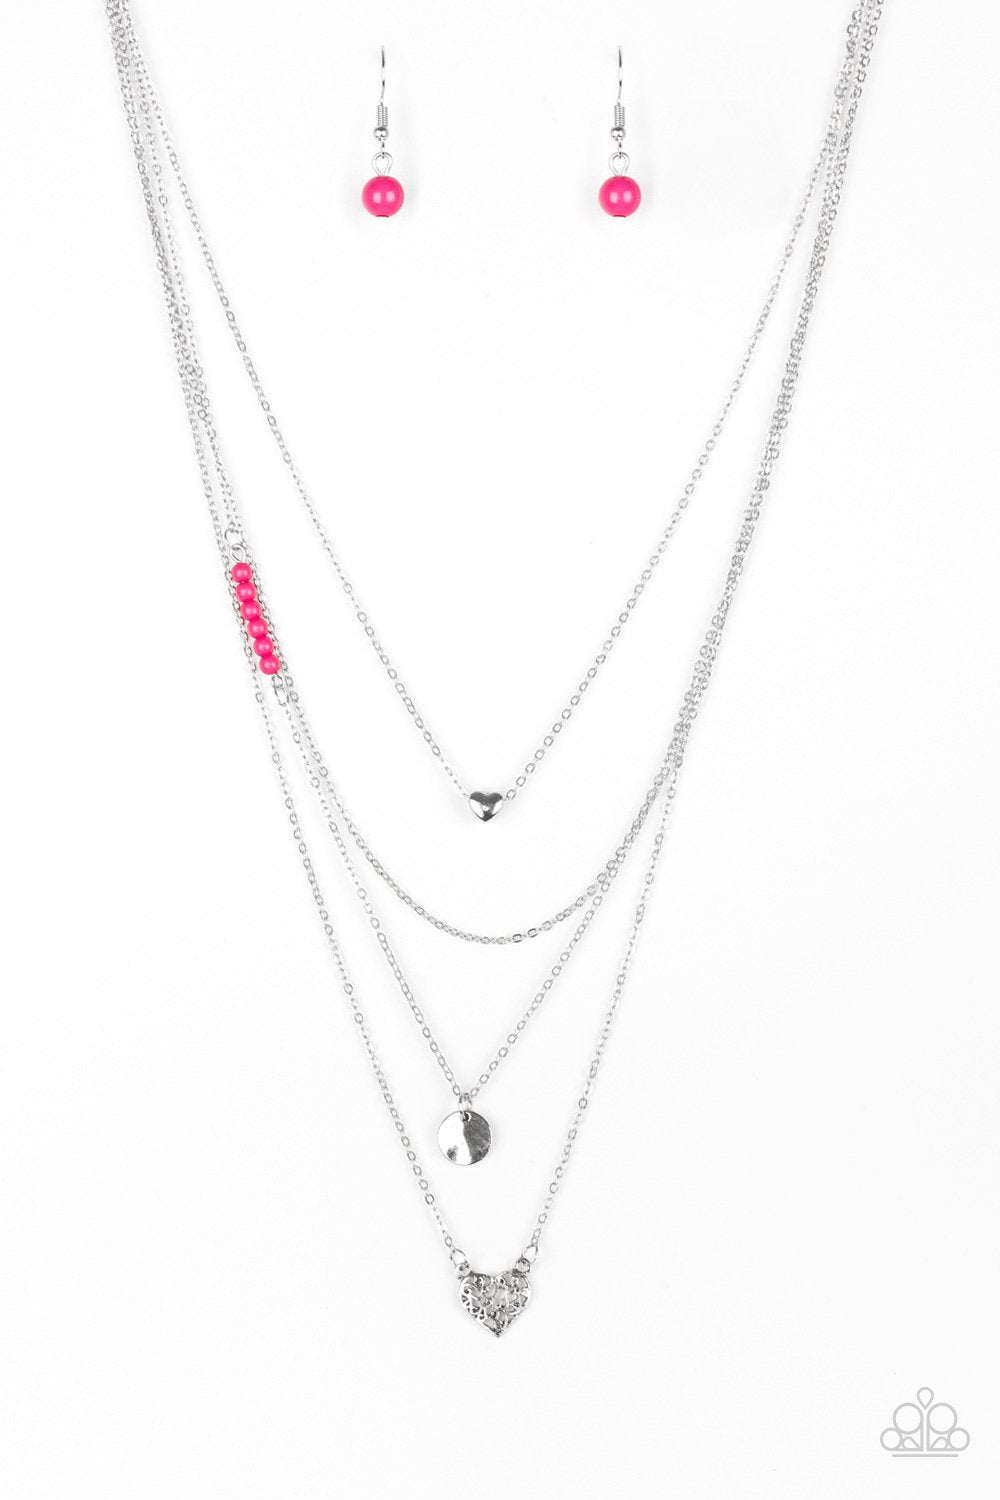 Gypsy Heart - Pink (Silver Heart) Necklace freeshipping - JewLz4u Gemstone Gallery